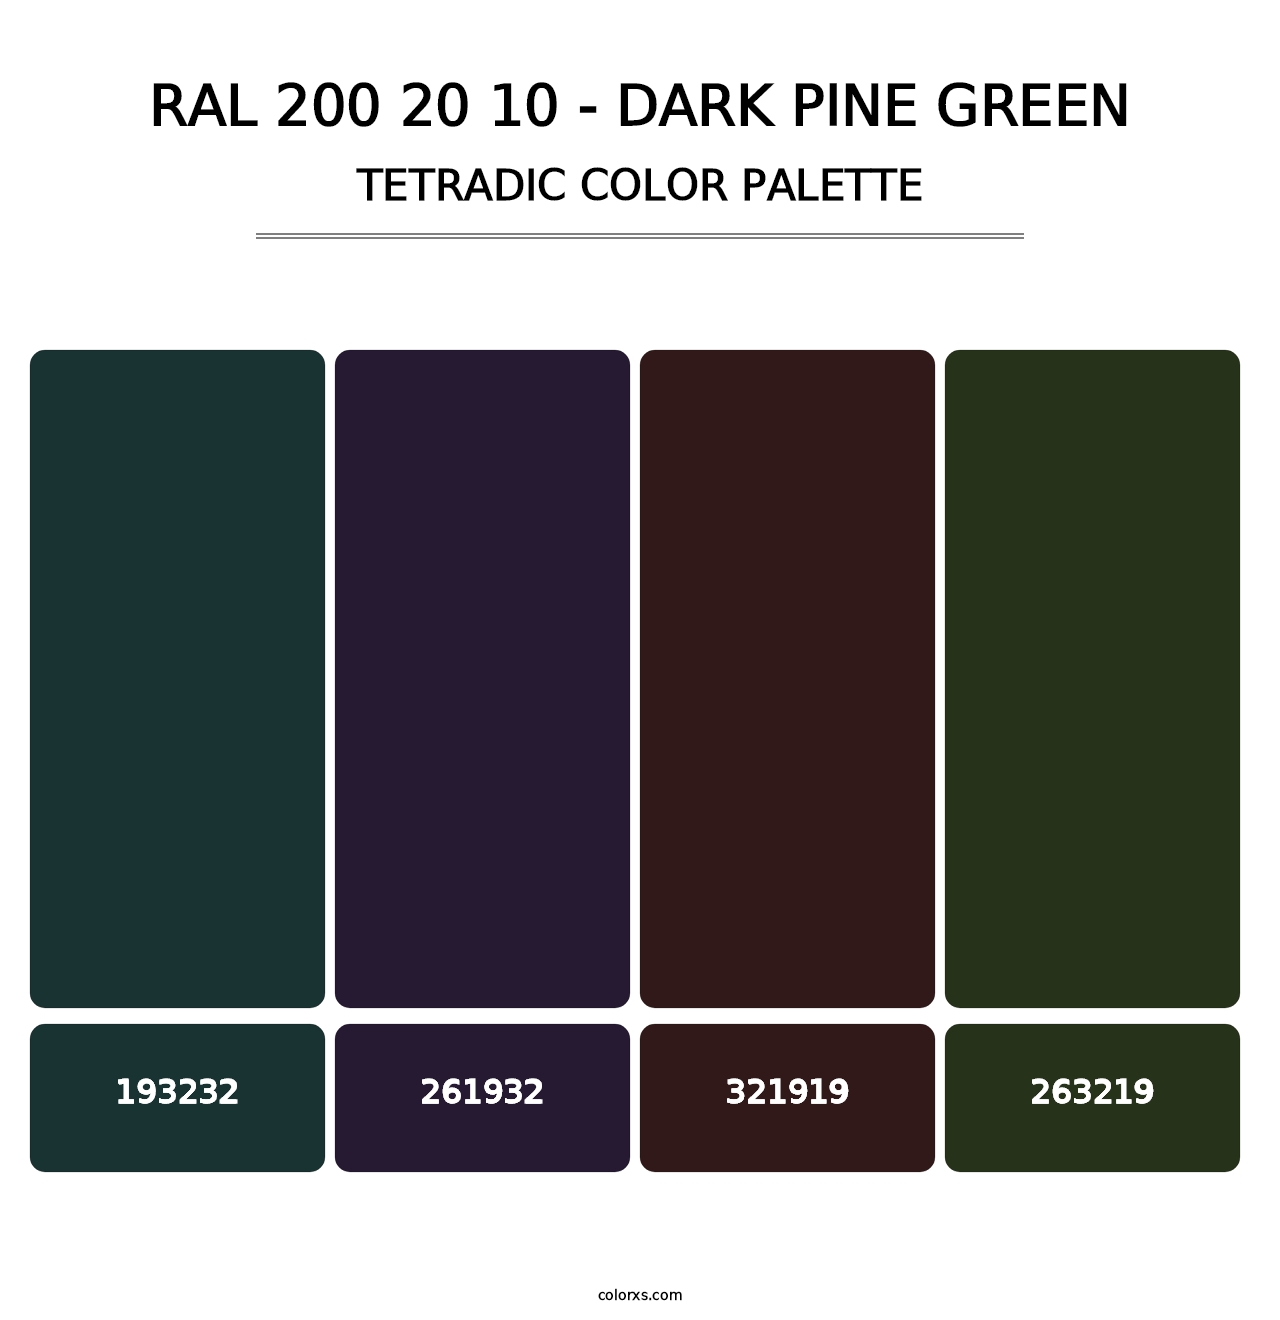 RAL 200 20 10 - Dark Pine Green - Tetradic Color Palette